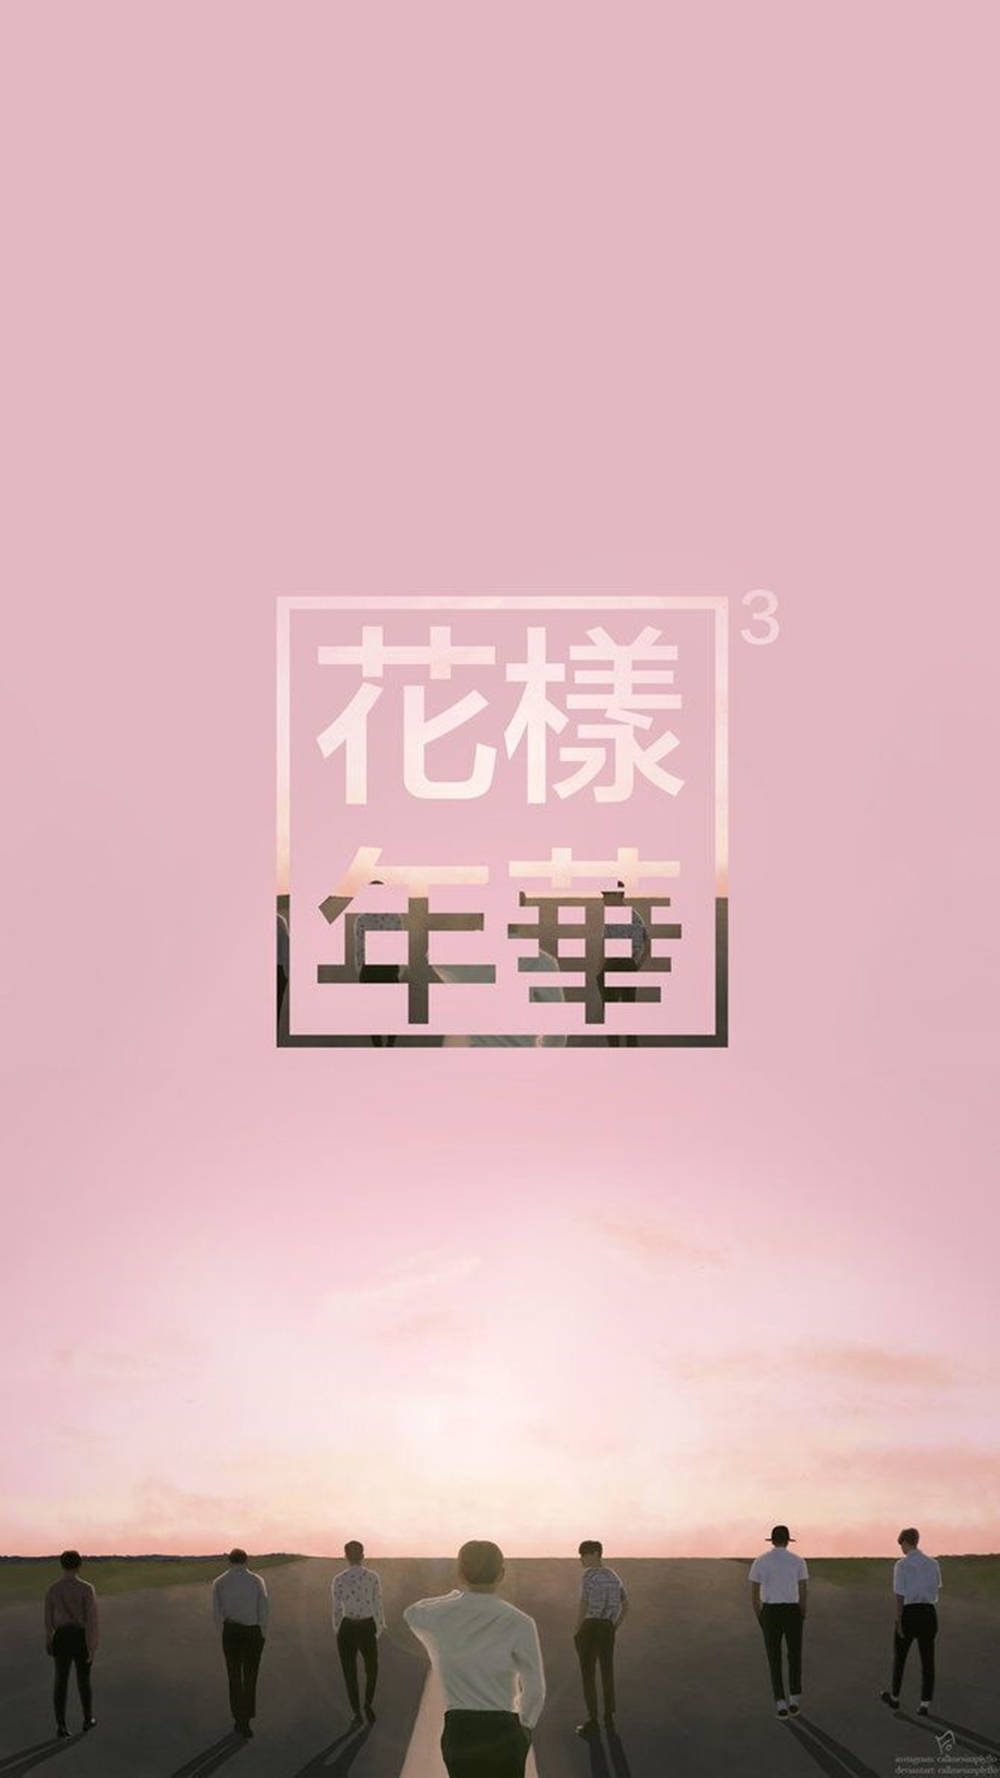 Stylish Pink Bts Phone Screen Poster Wallpaper